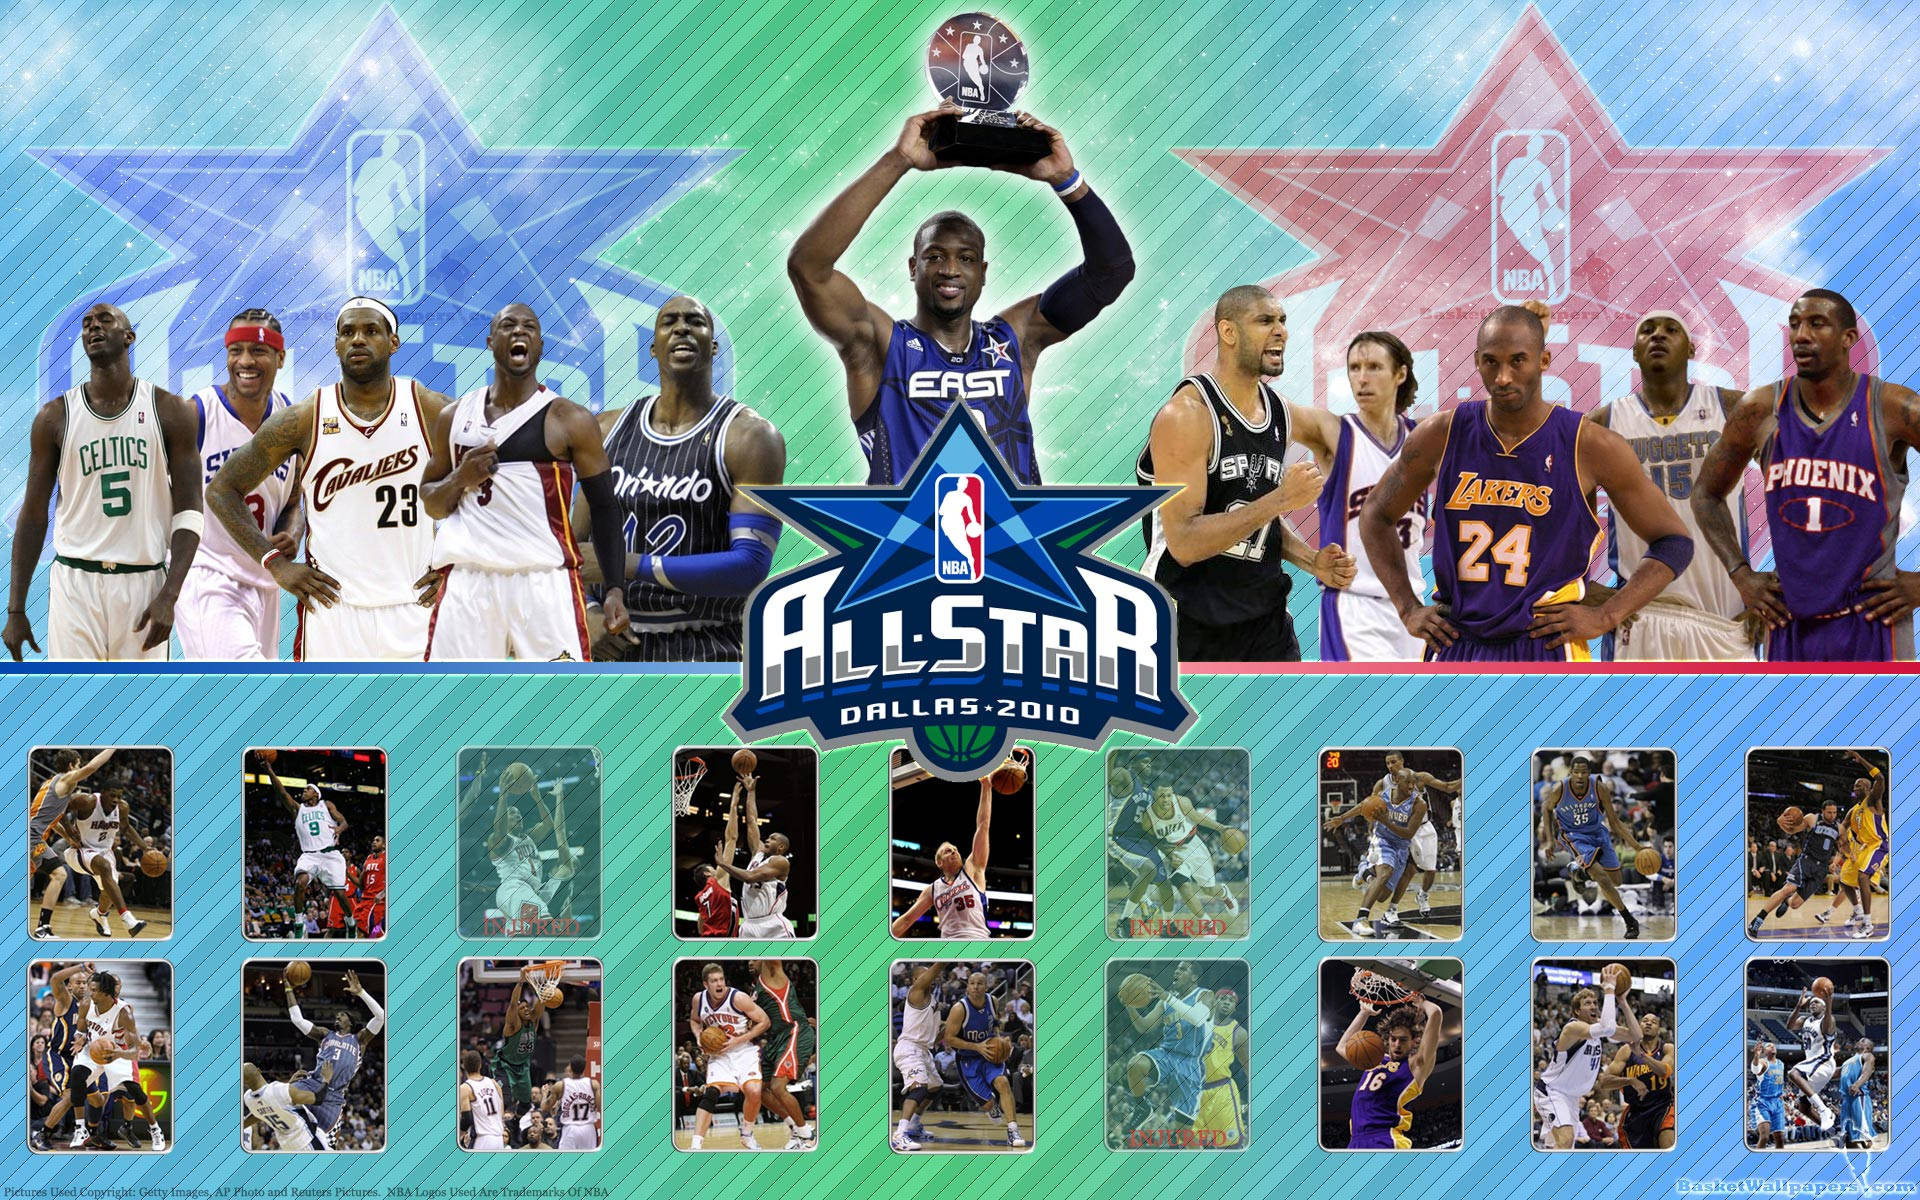 All-star Dallas Basketball Team Wallpaper